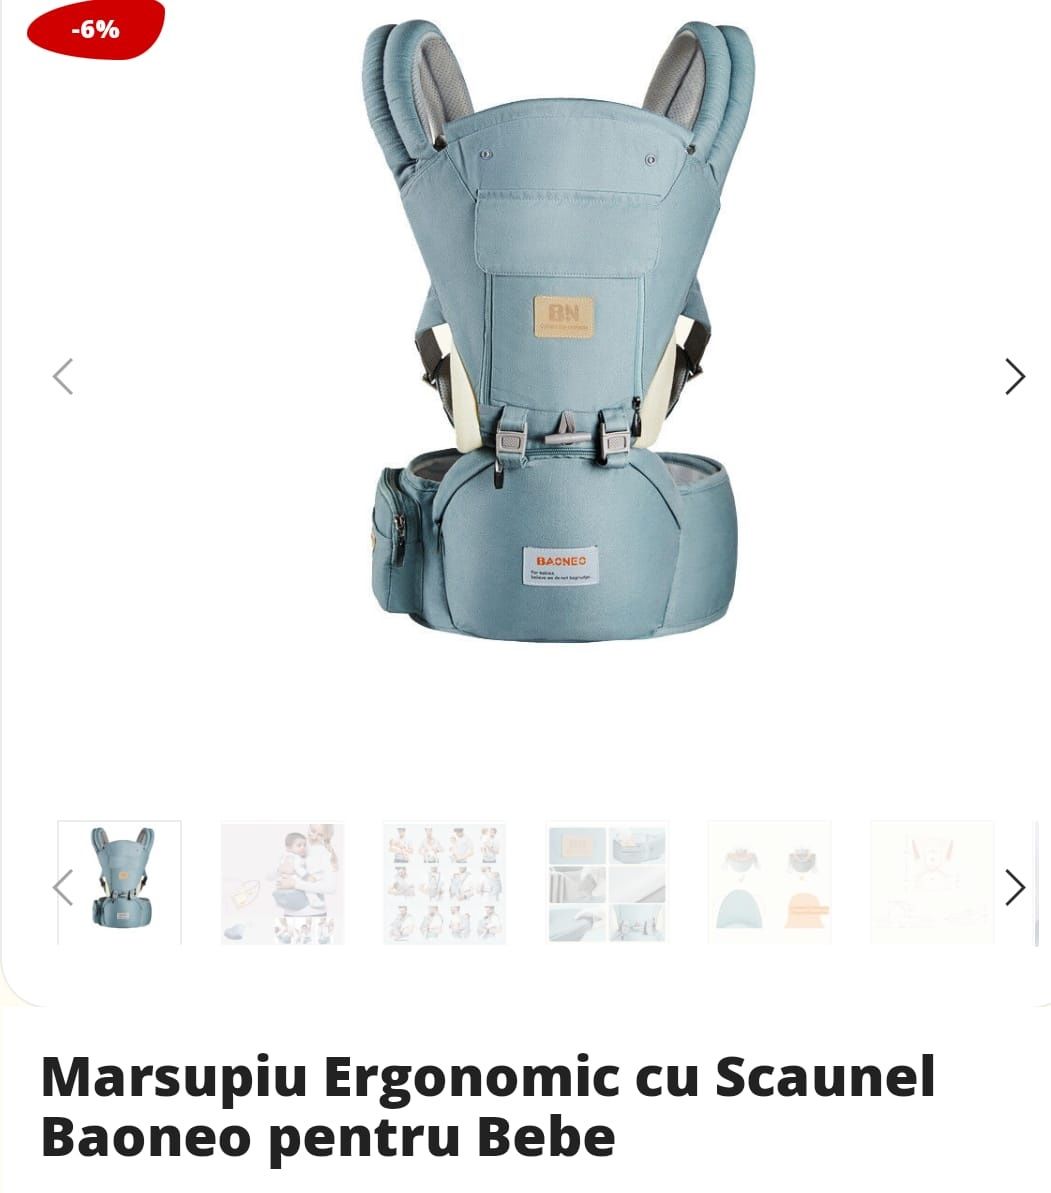 Marsupiu ergonomic cu scaunel Baoneo